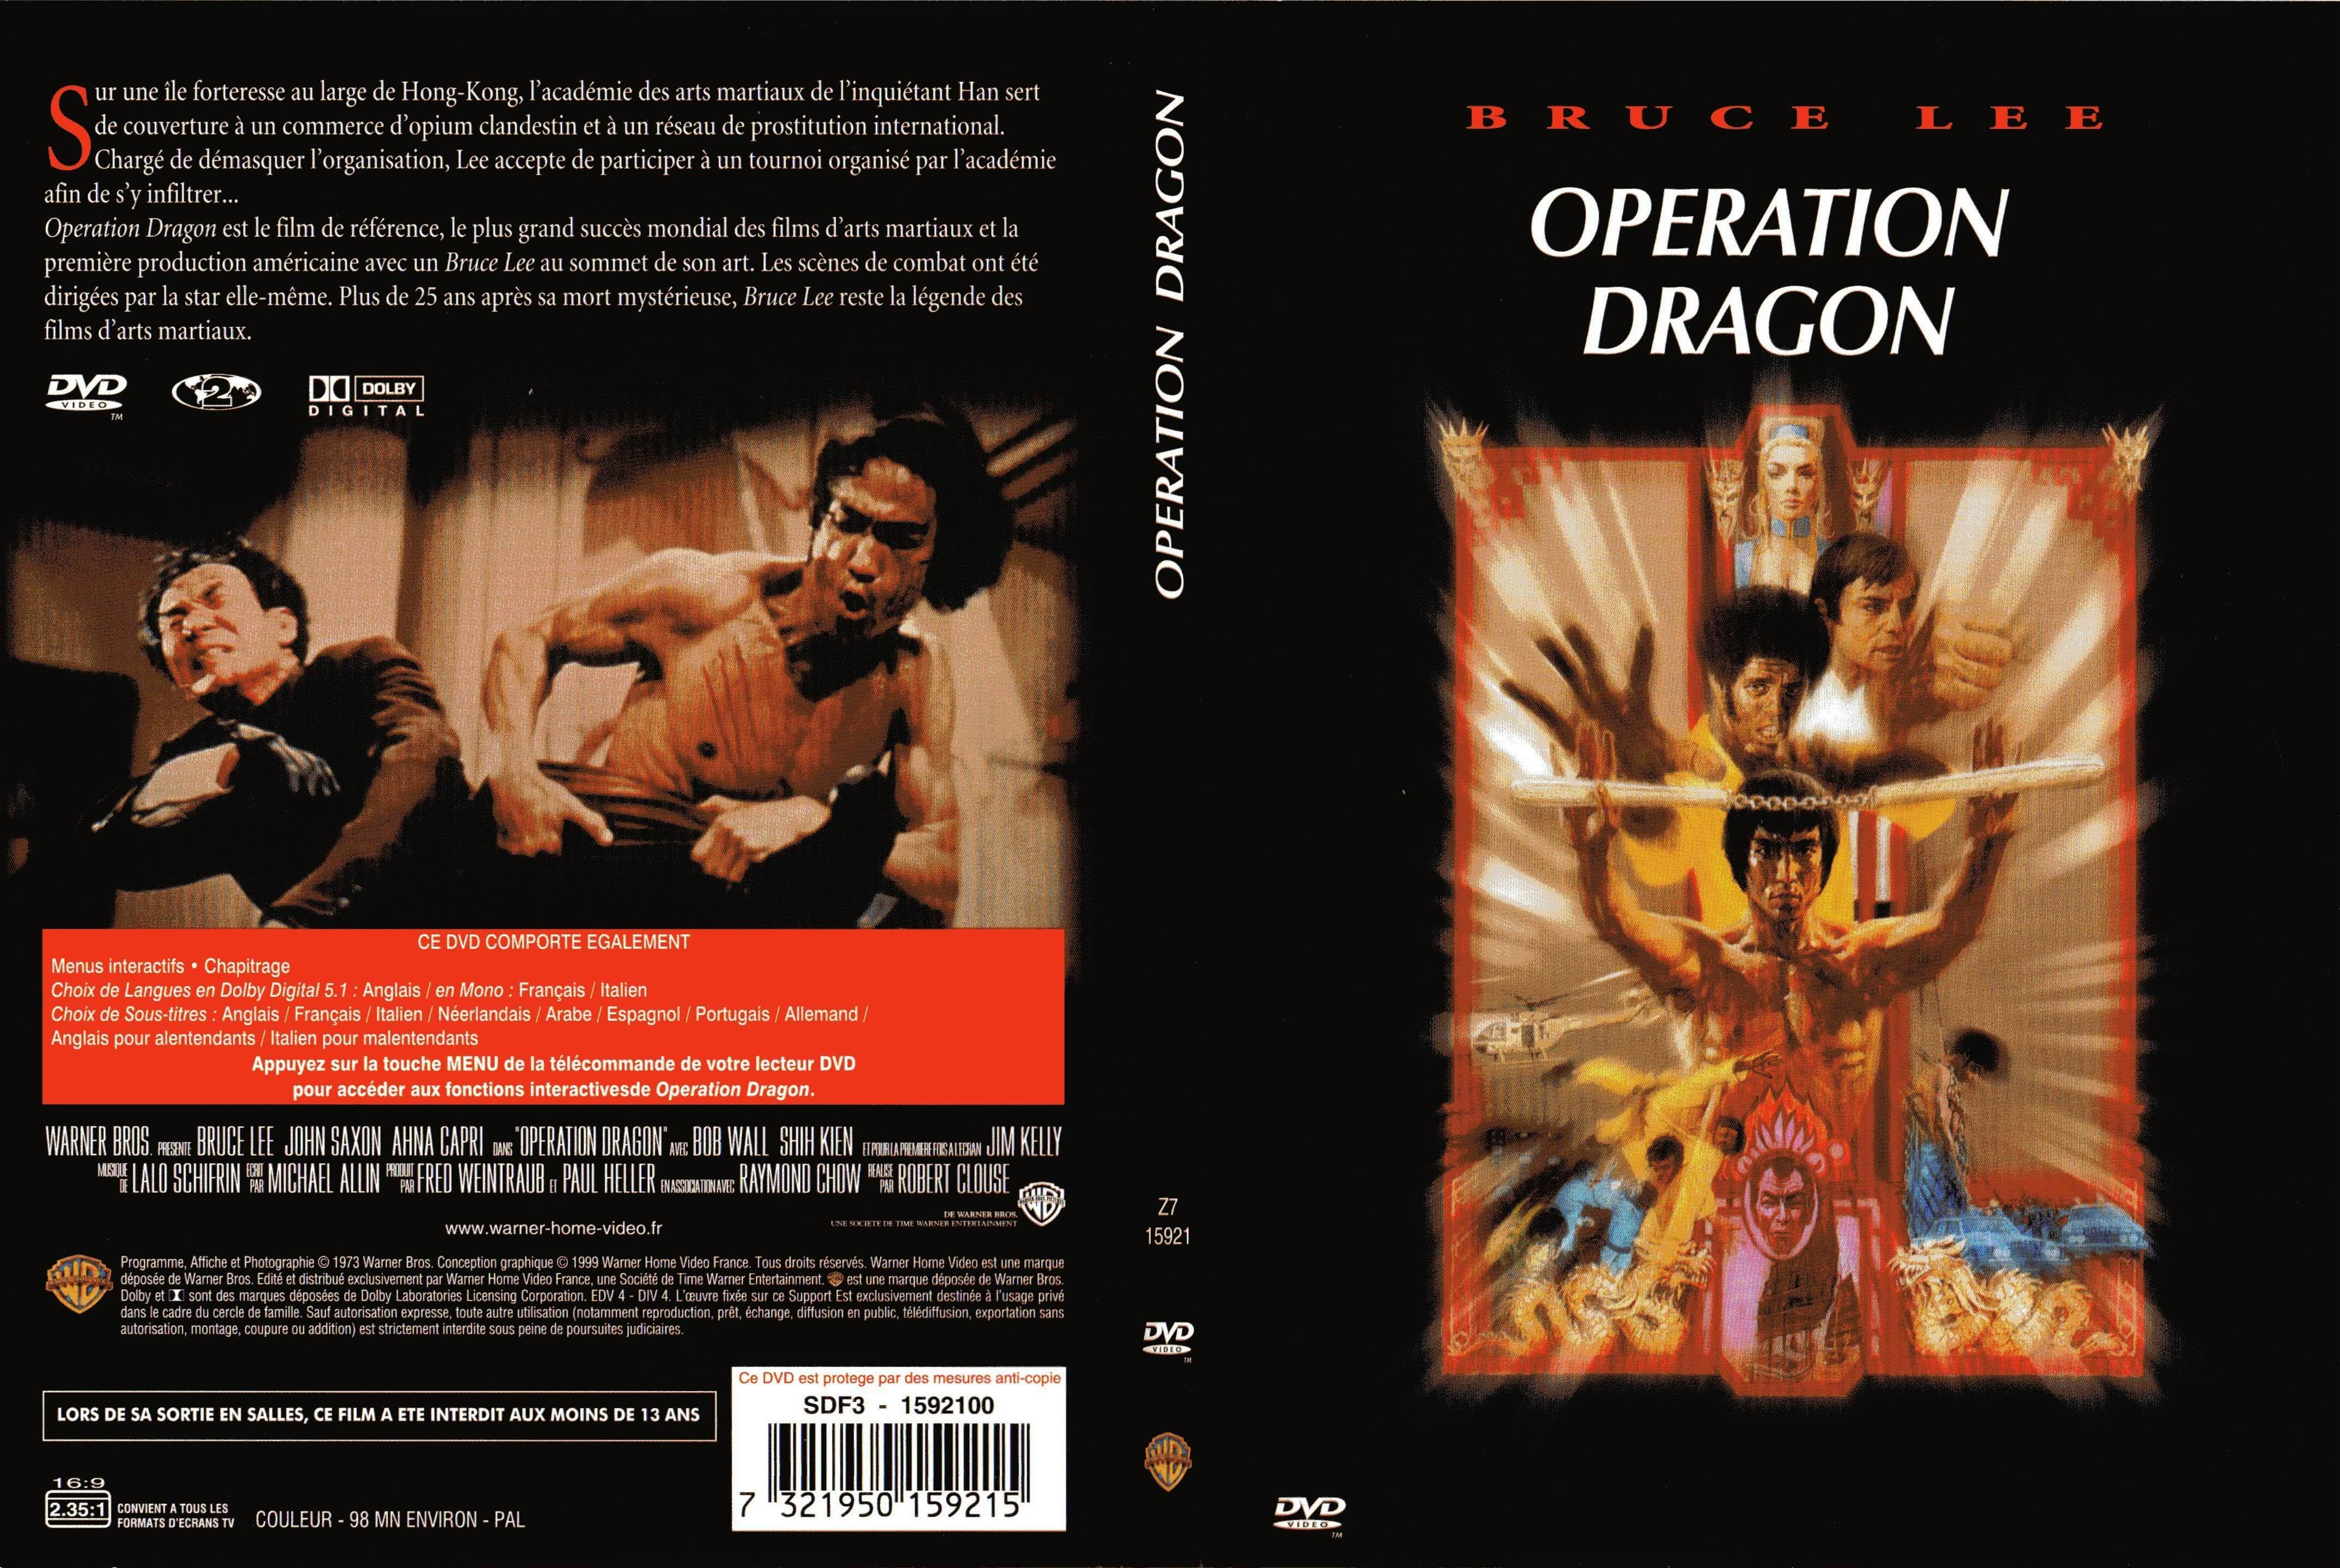 Jaquette DVD Operation dragon - SLIM